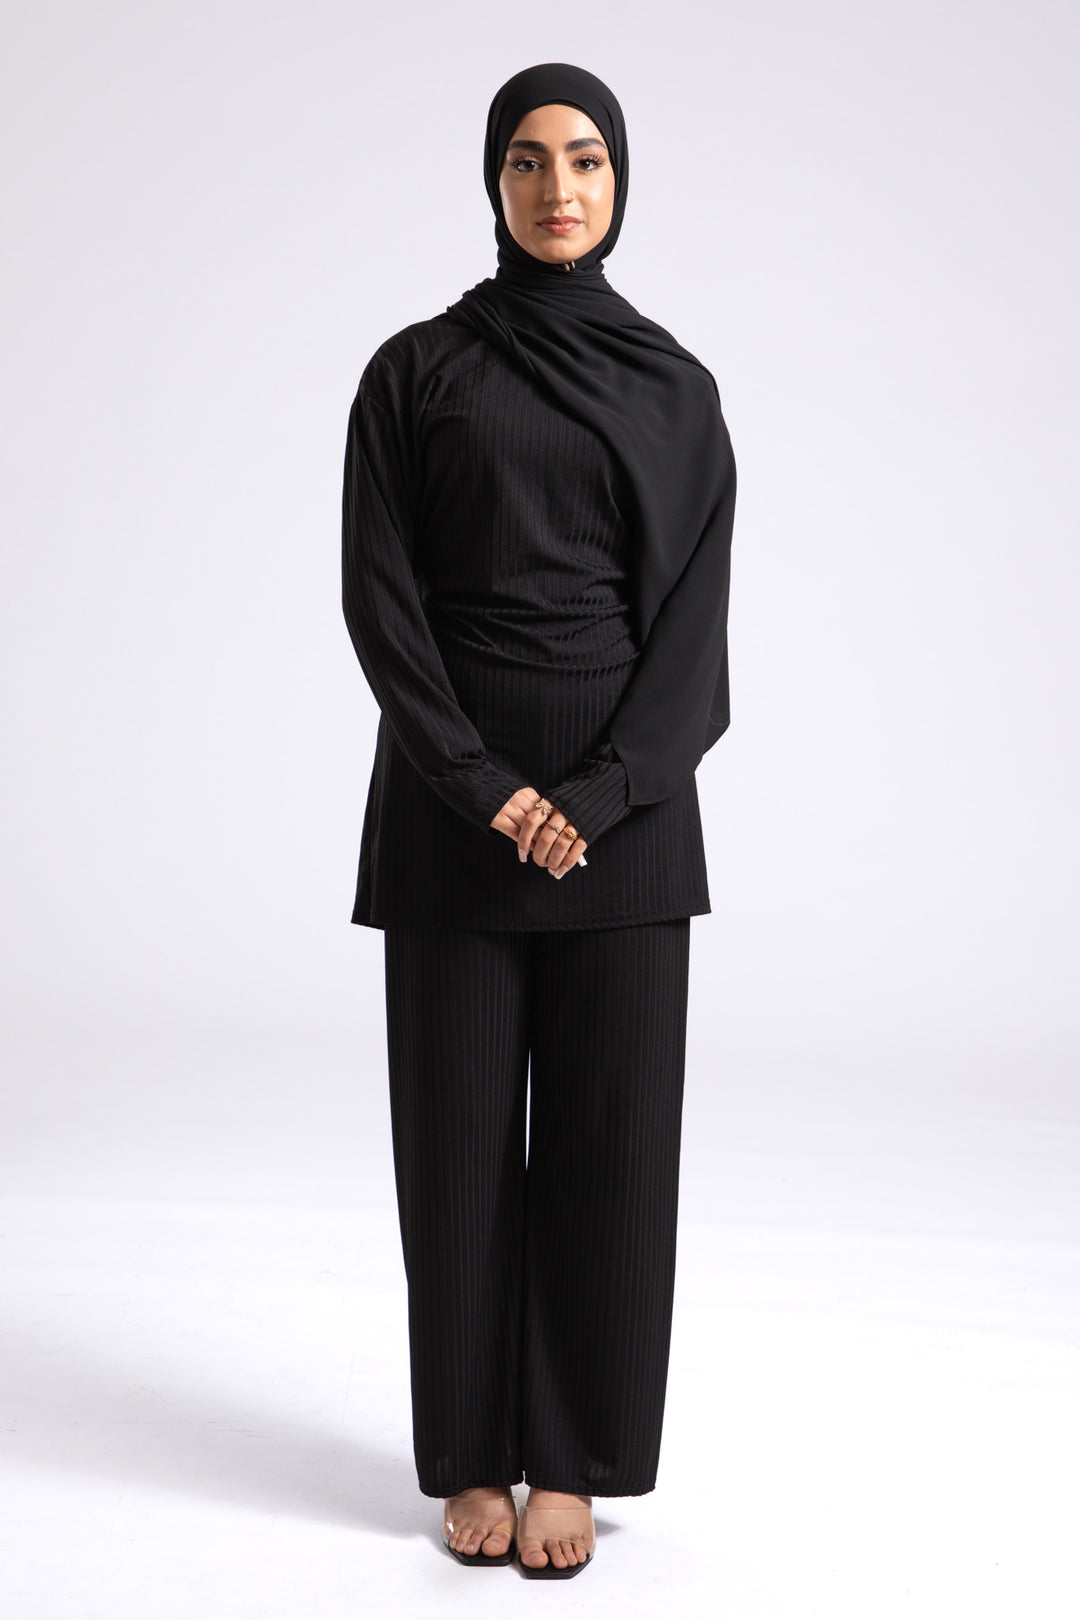 Georgette Black Hijab